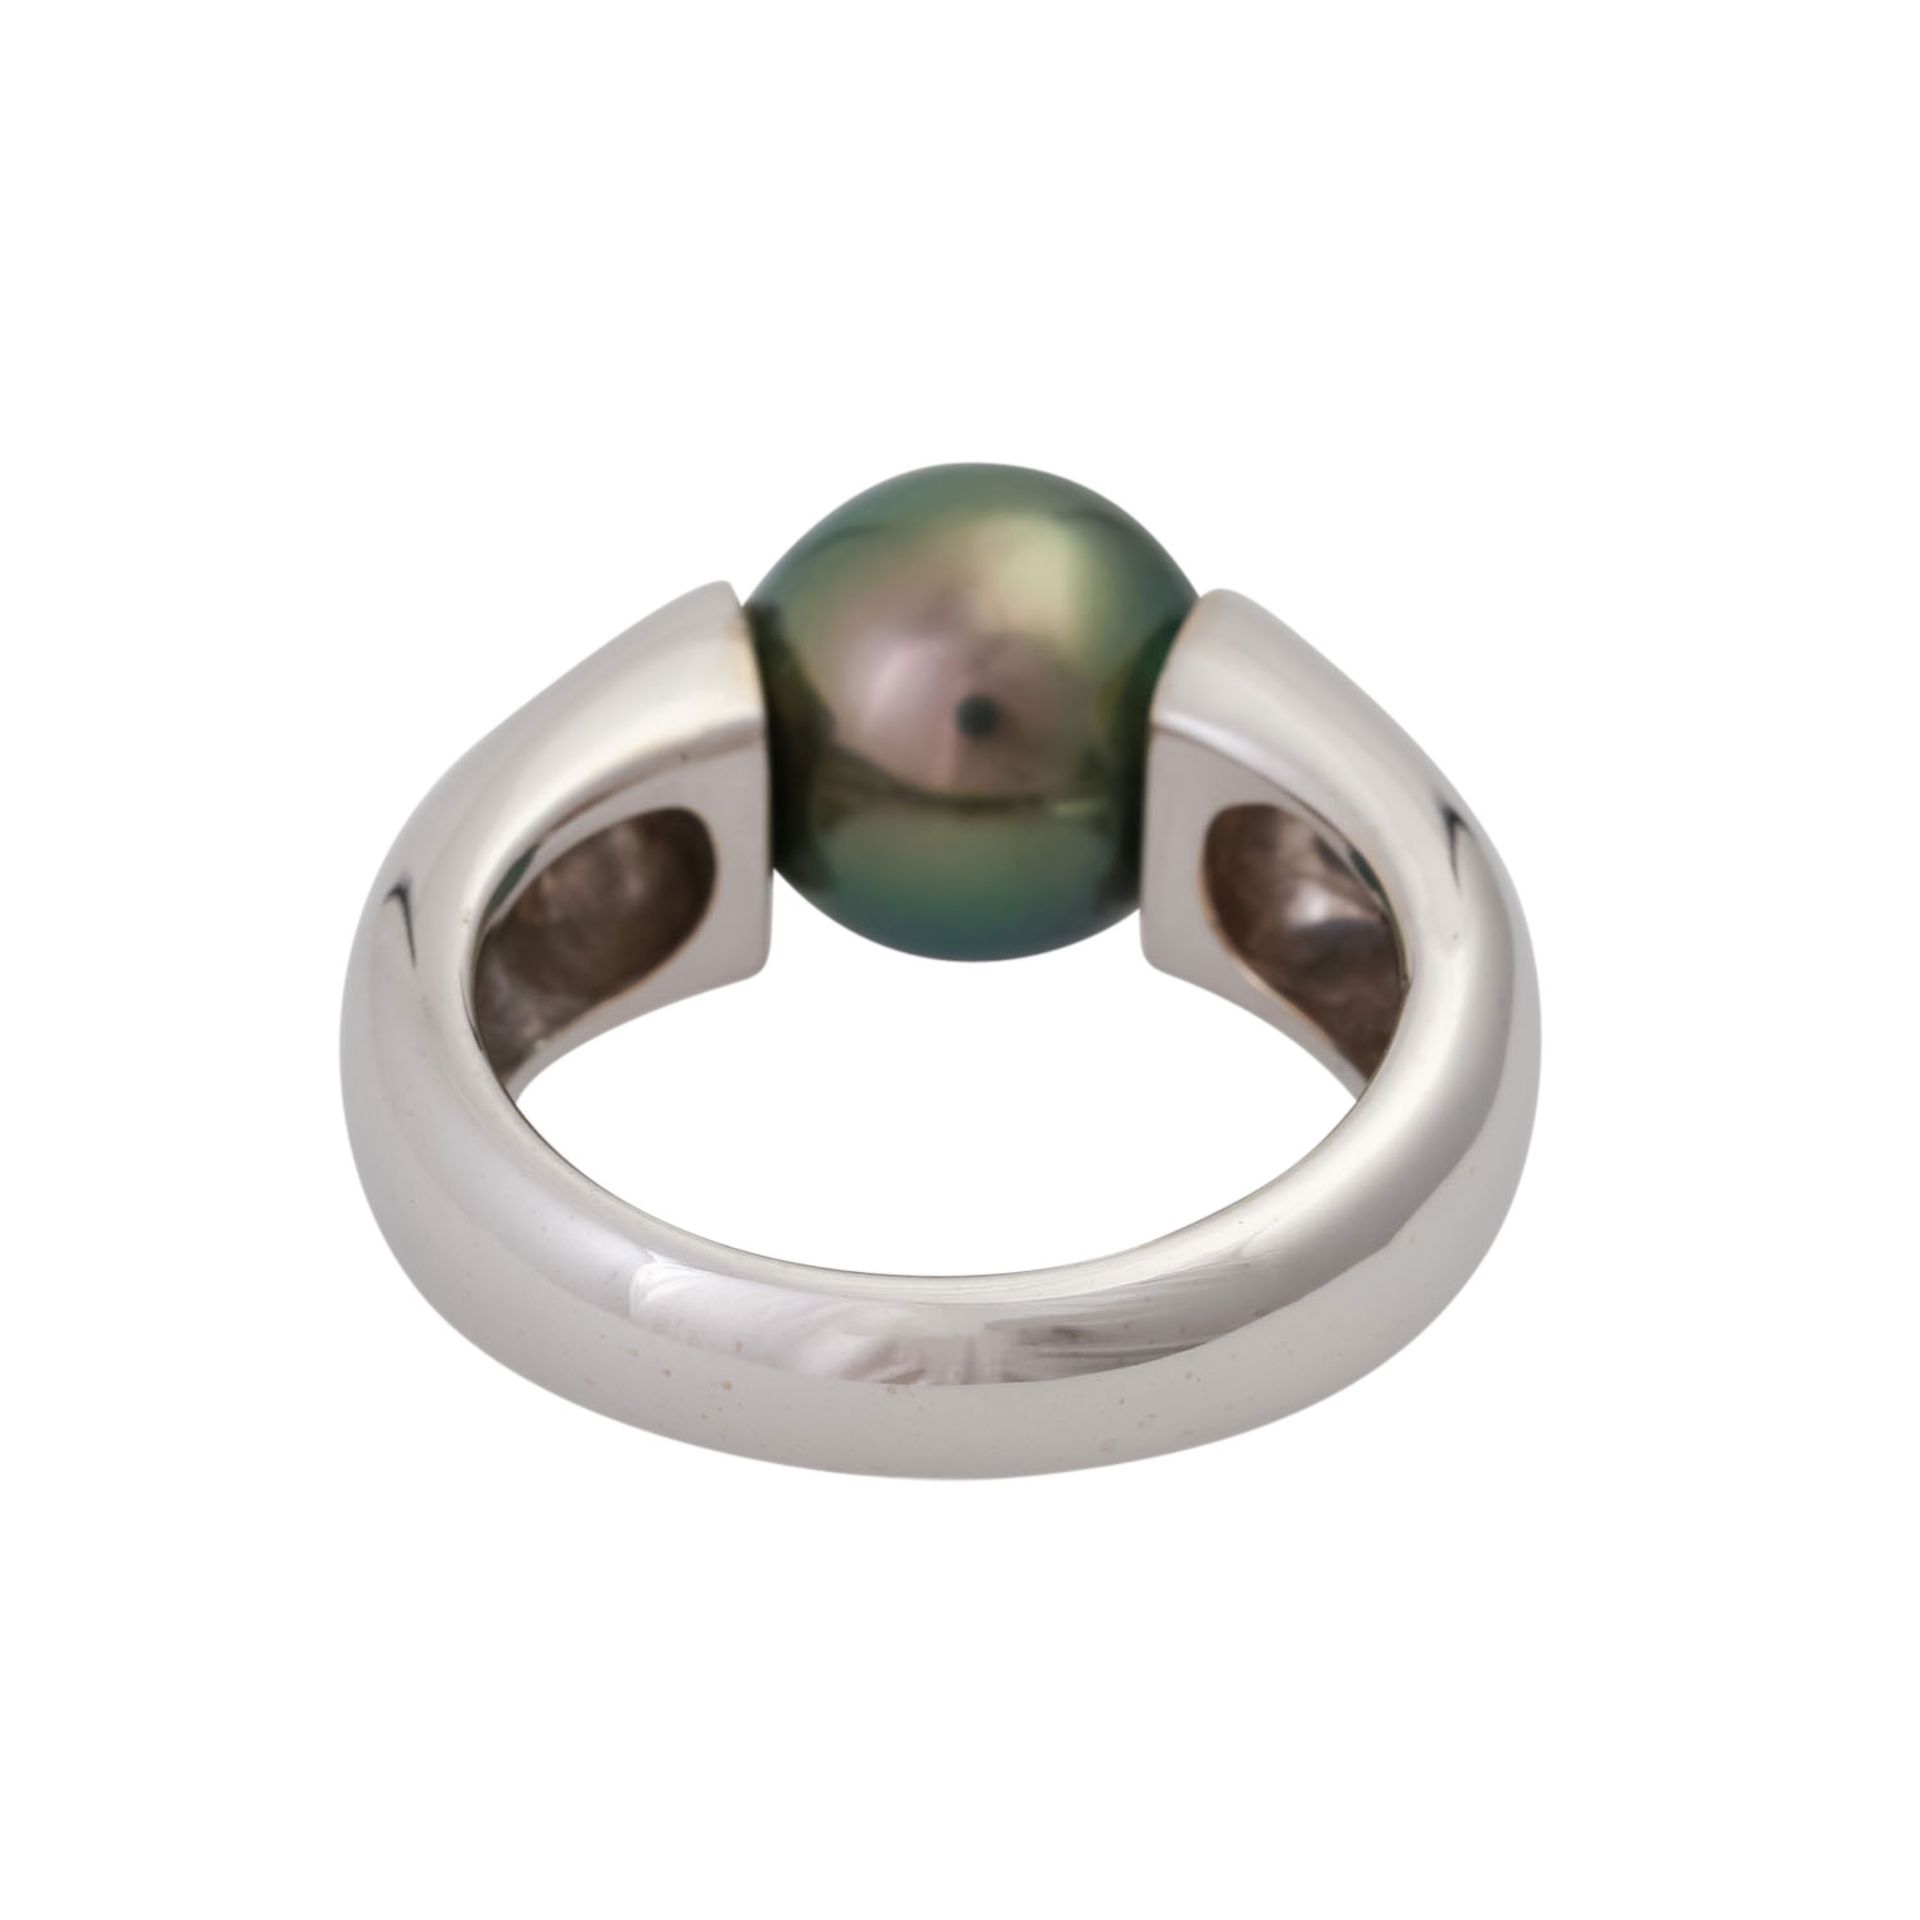 Ring mit Tahiti Zuchtperle, ca. 11 mm, grau-grünmit rosa Oberton, schöner Lüster, WG 14K, RW 57, - Image 4 of 4